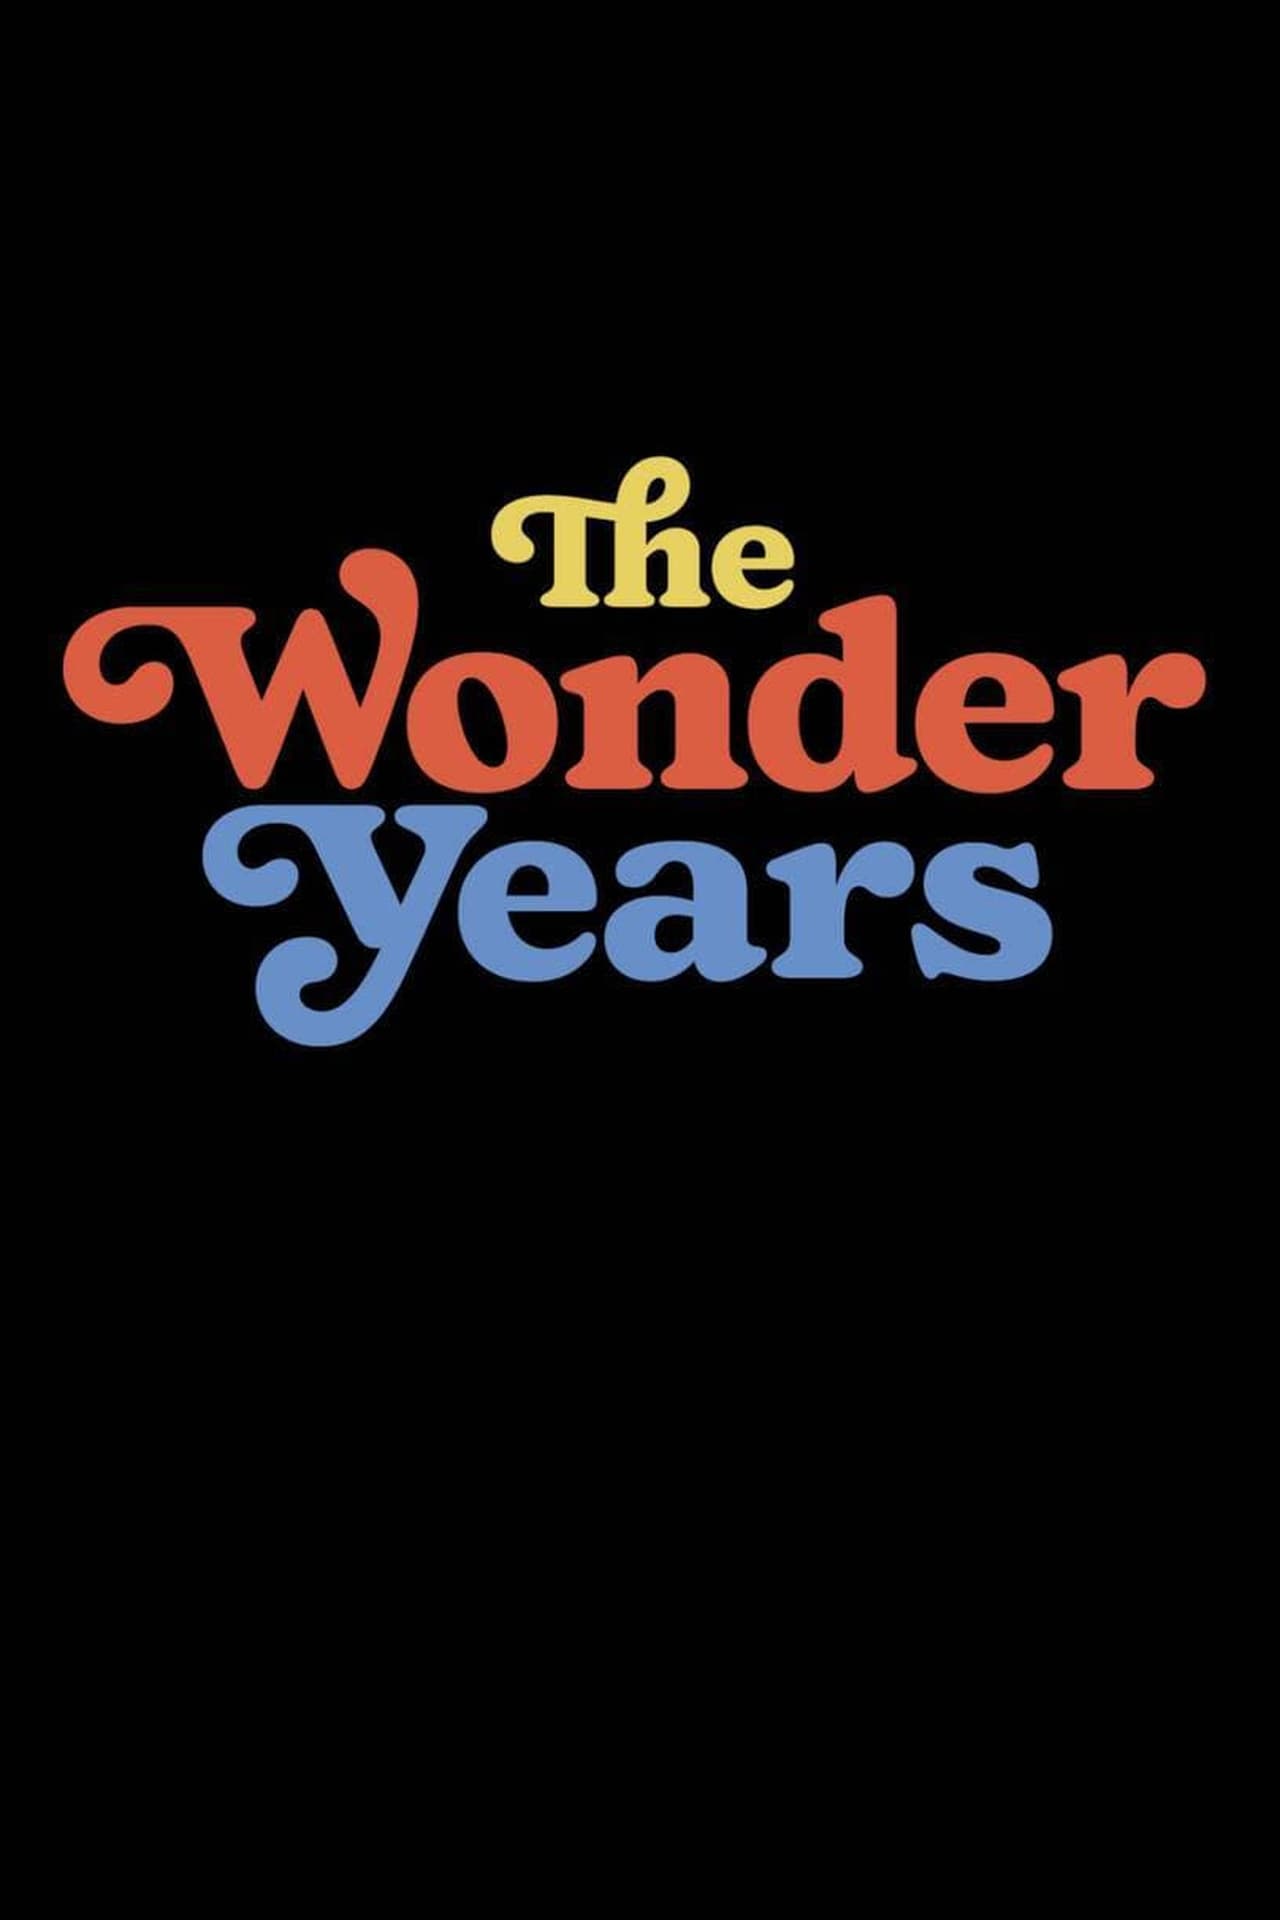 The Wonder Years (season 1)